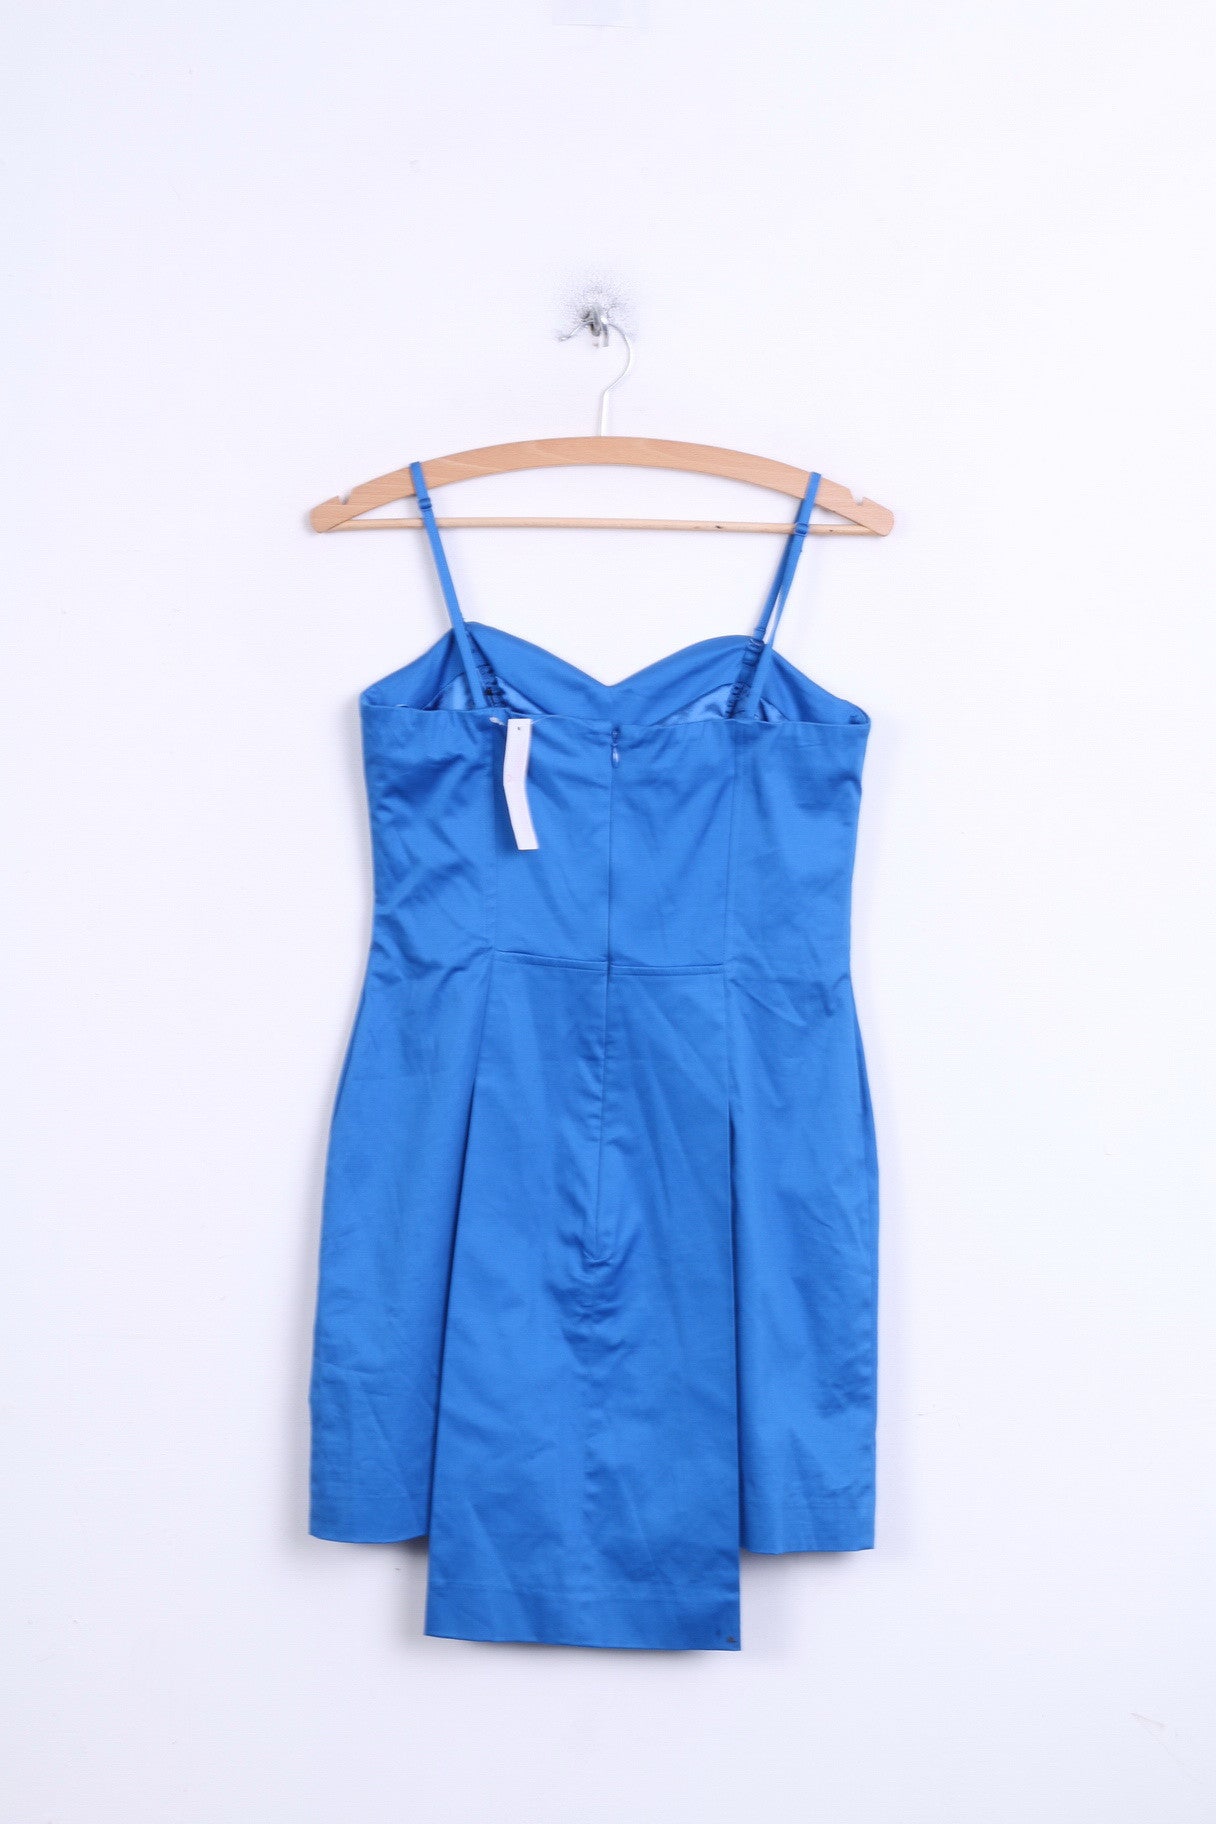 New Caprice Womens 10 M Dress Blue Higtlowe Sweetheart Neckline - RetrospectClothes